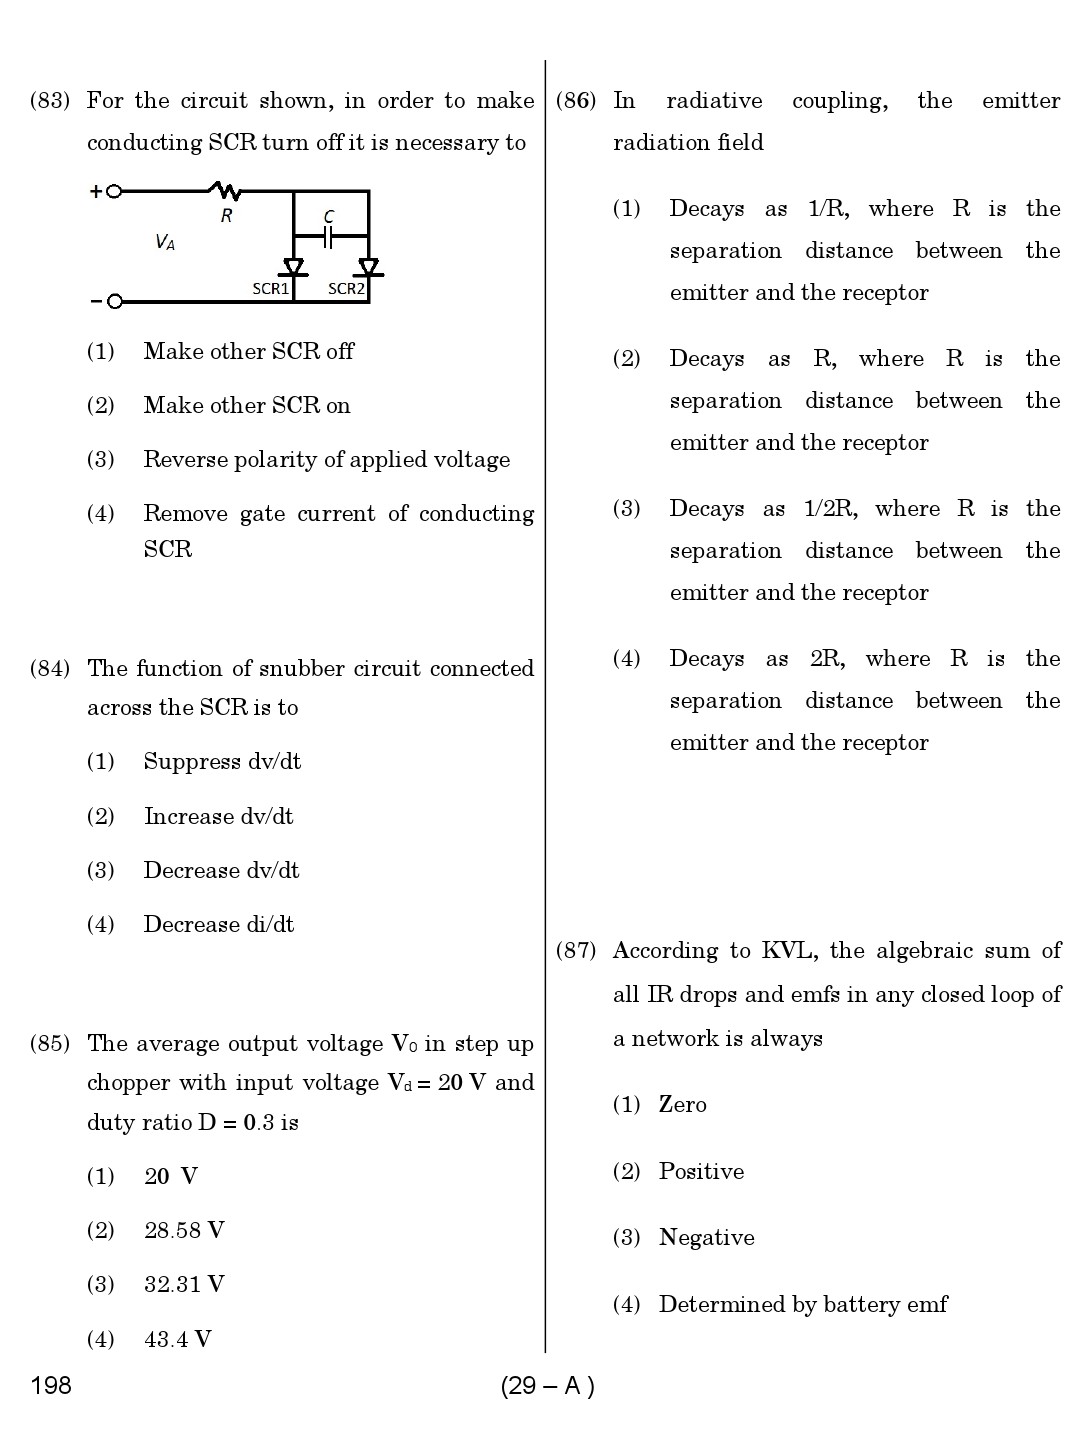 Karnataka PSC Junior Engineer Electrical Exam Sample Question Paper 29